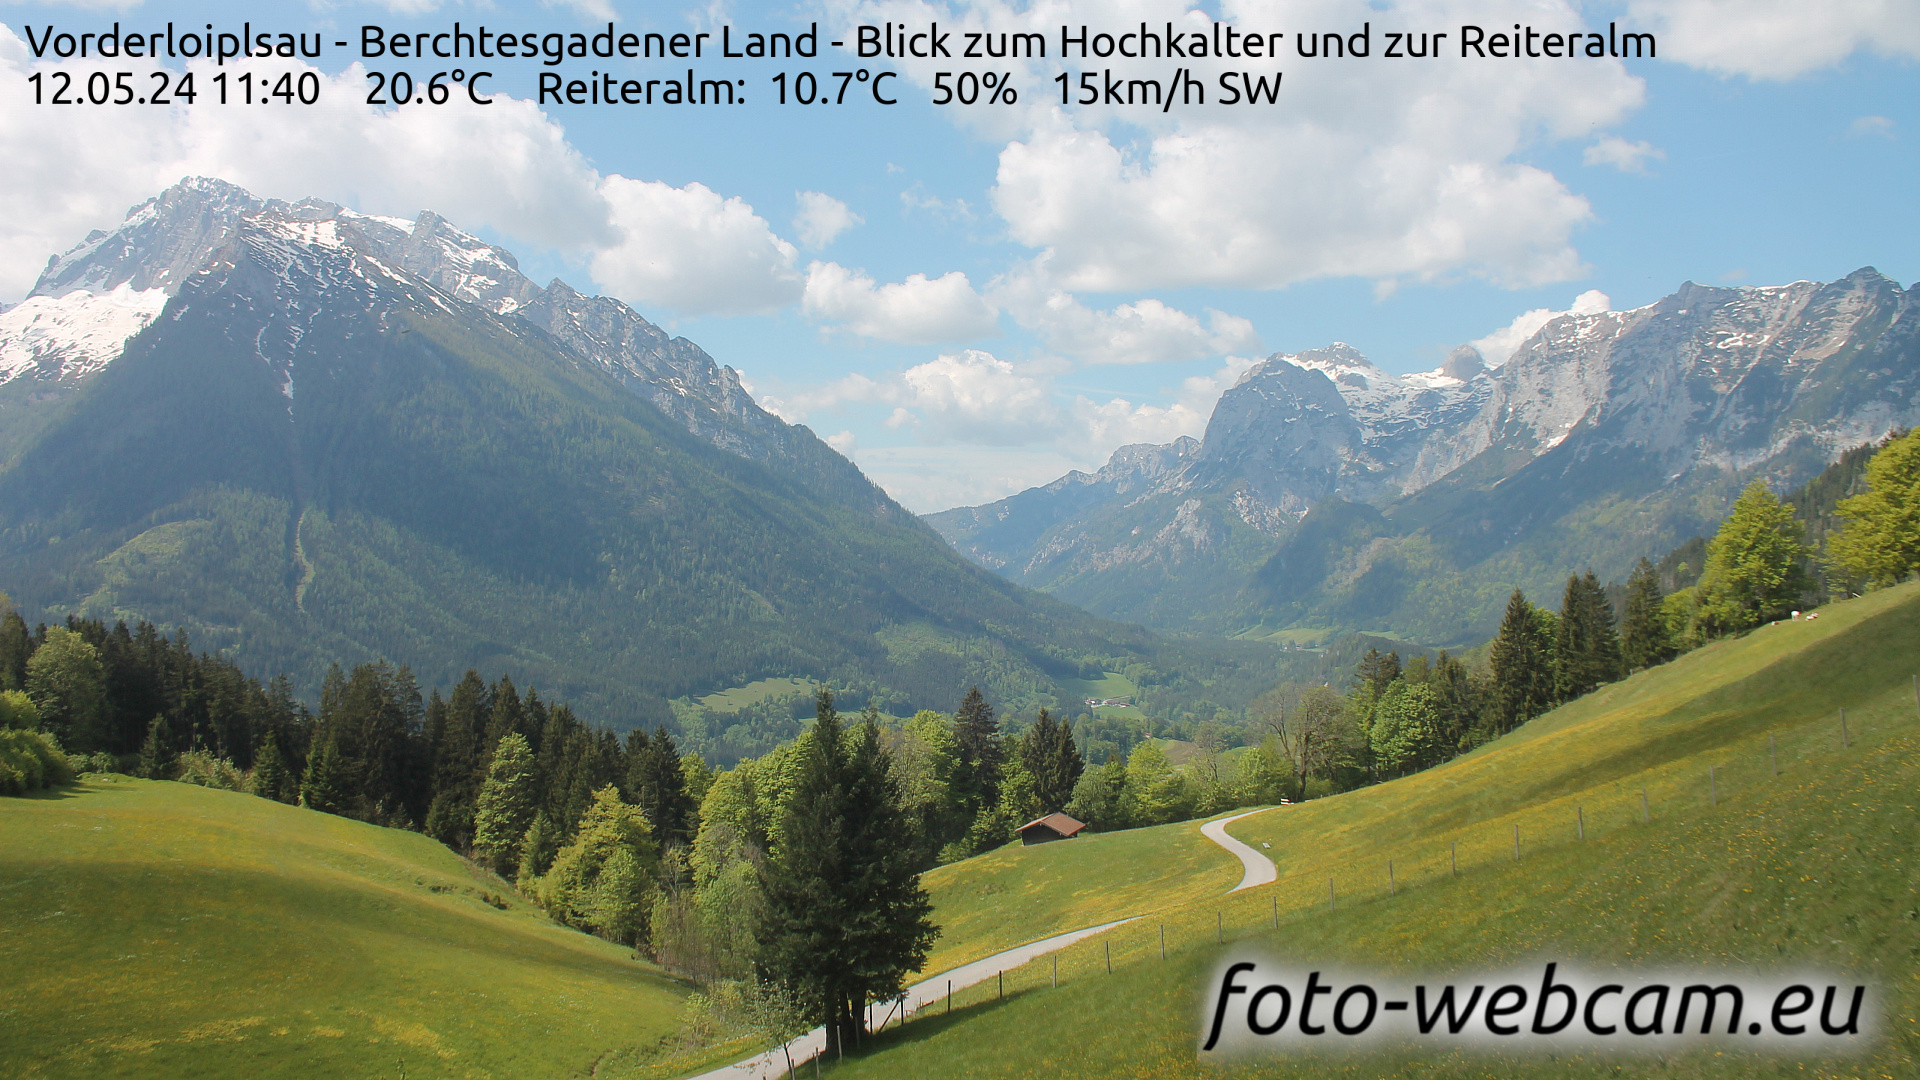 Ramsau bei Berchtesgaden Mi. 11:48